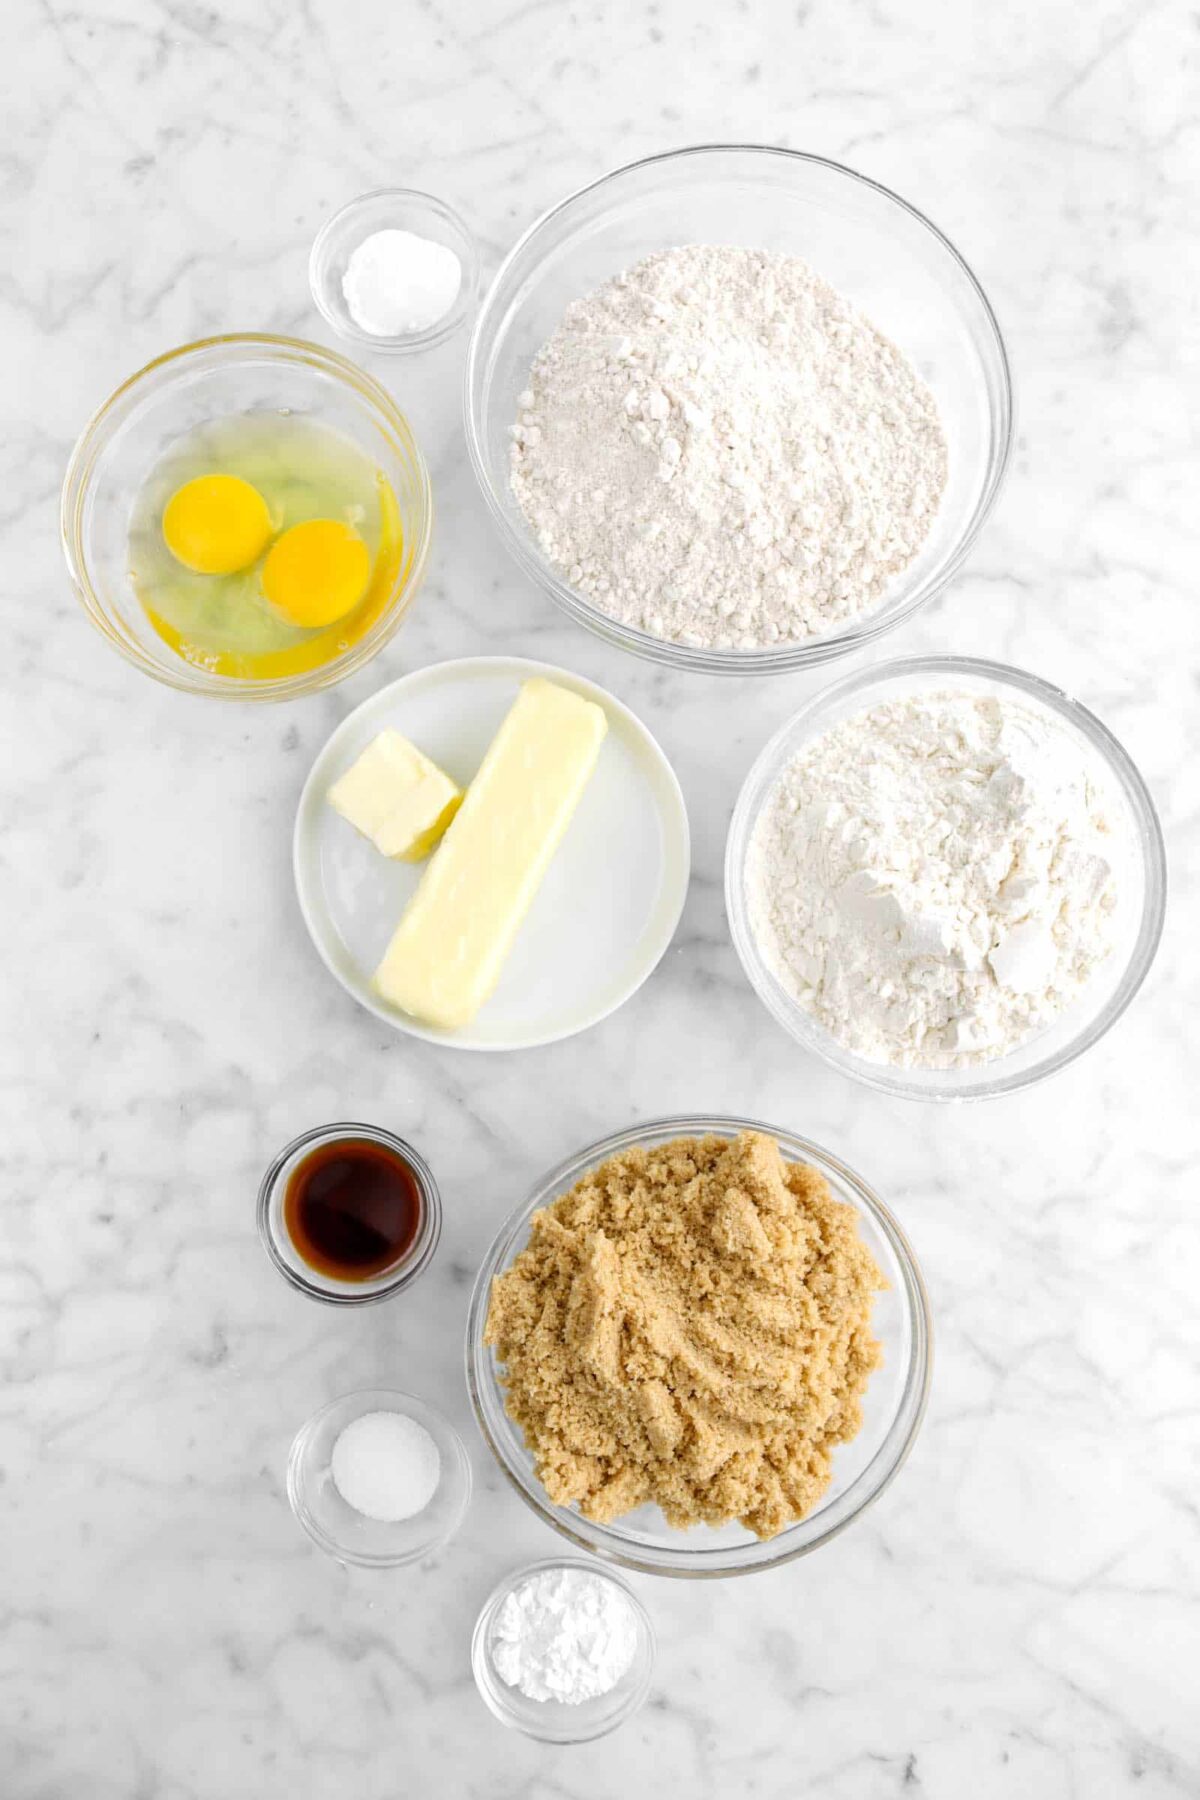 baking powder, eggs, oat flour, butter, all-purpose flour, brown sugar, baking powder, salt, vanilla in glass bowls